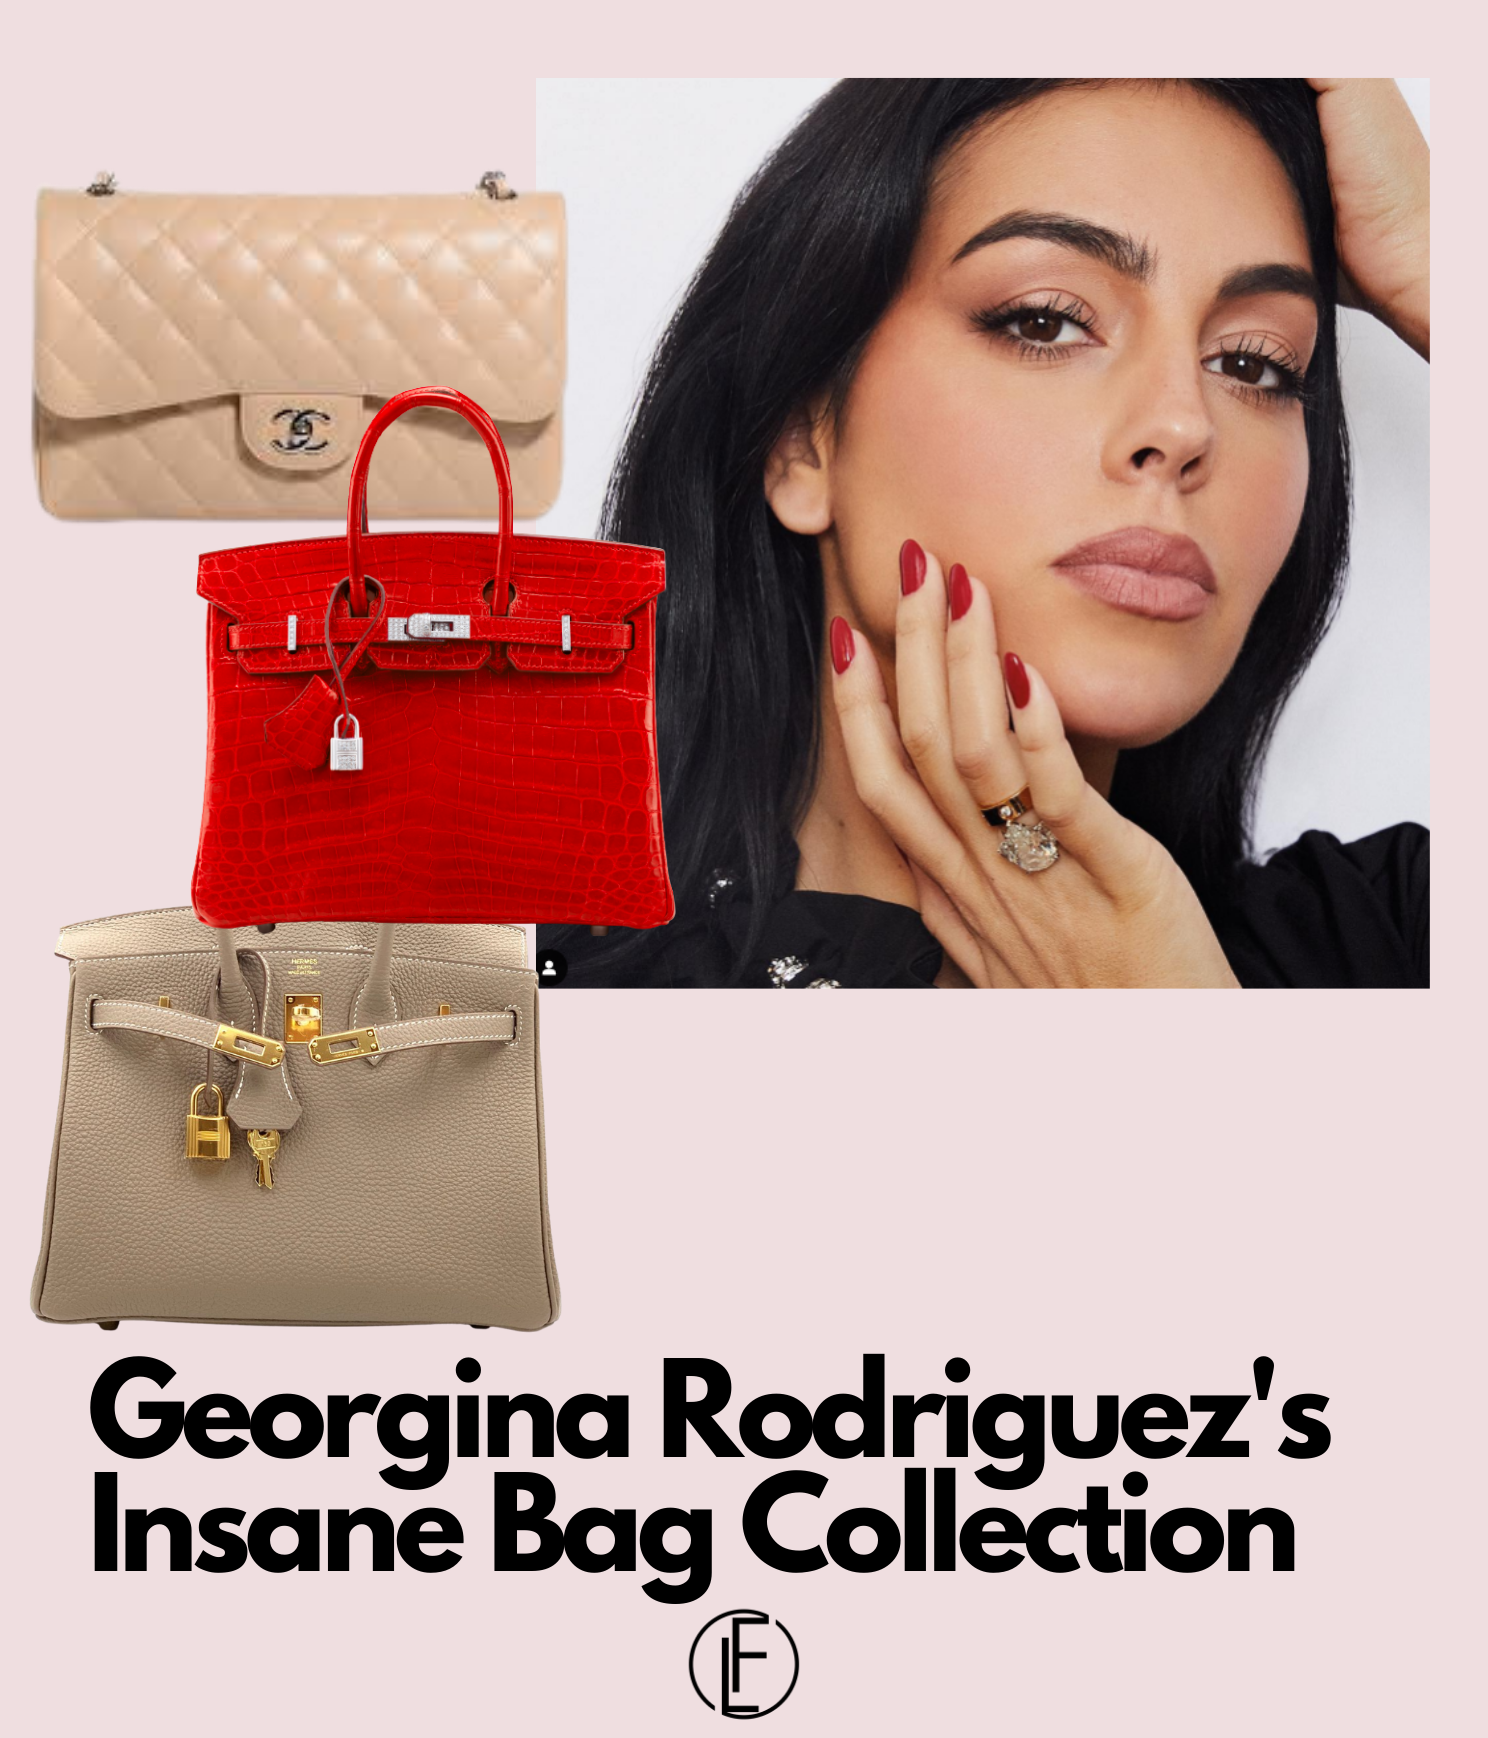 georgina rodriguez bag collection